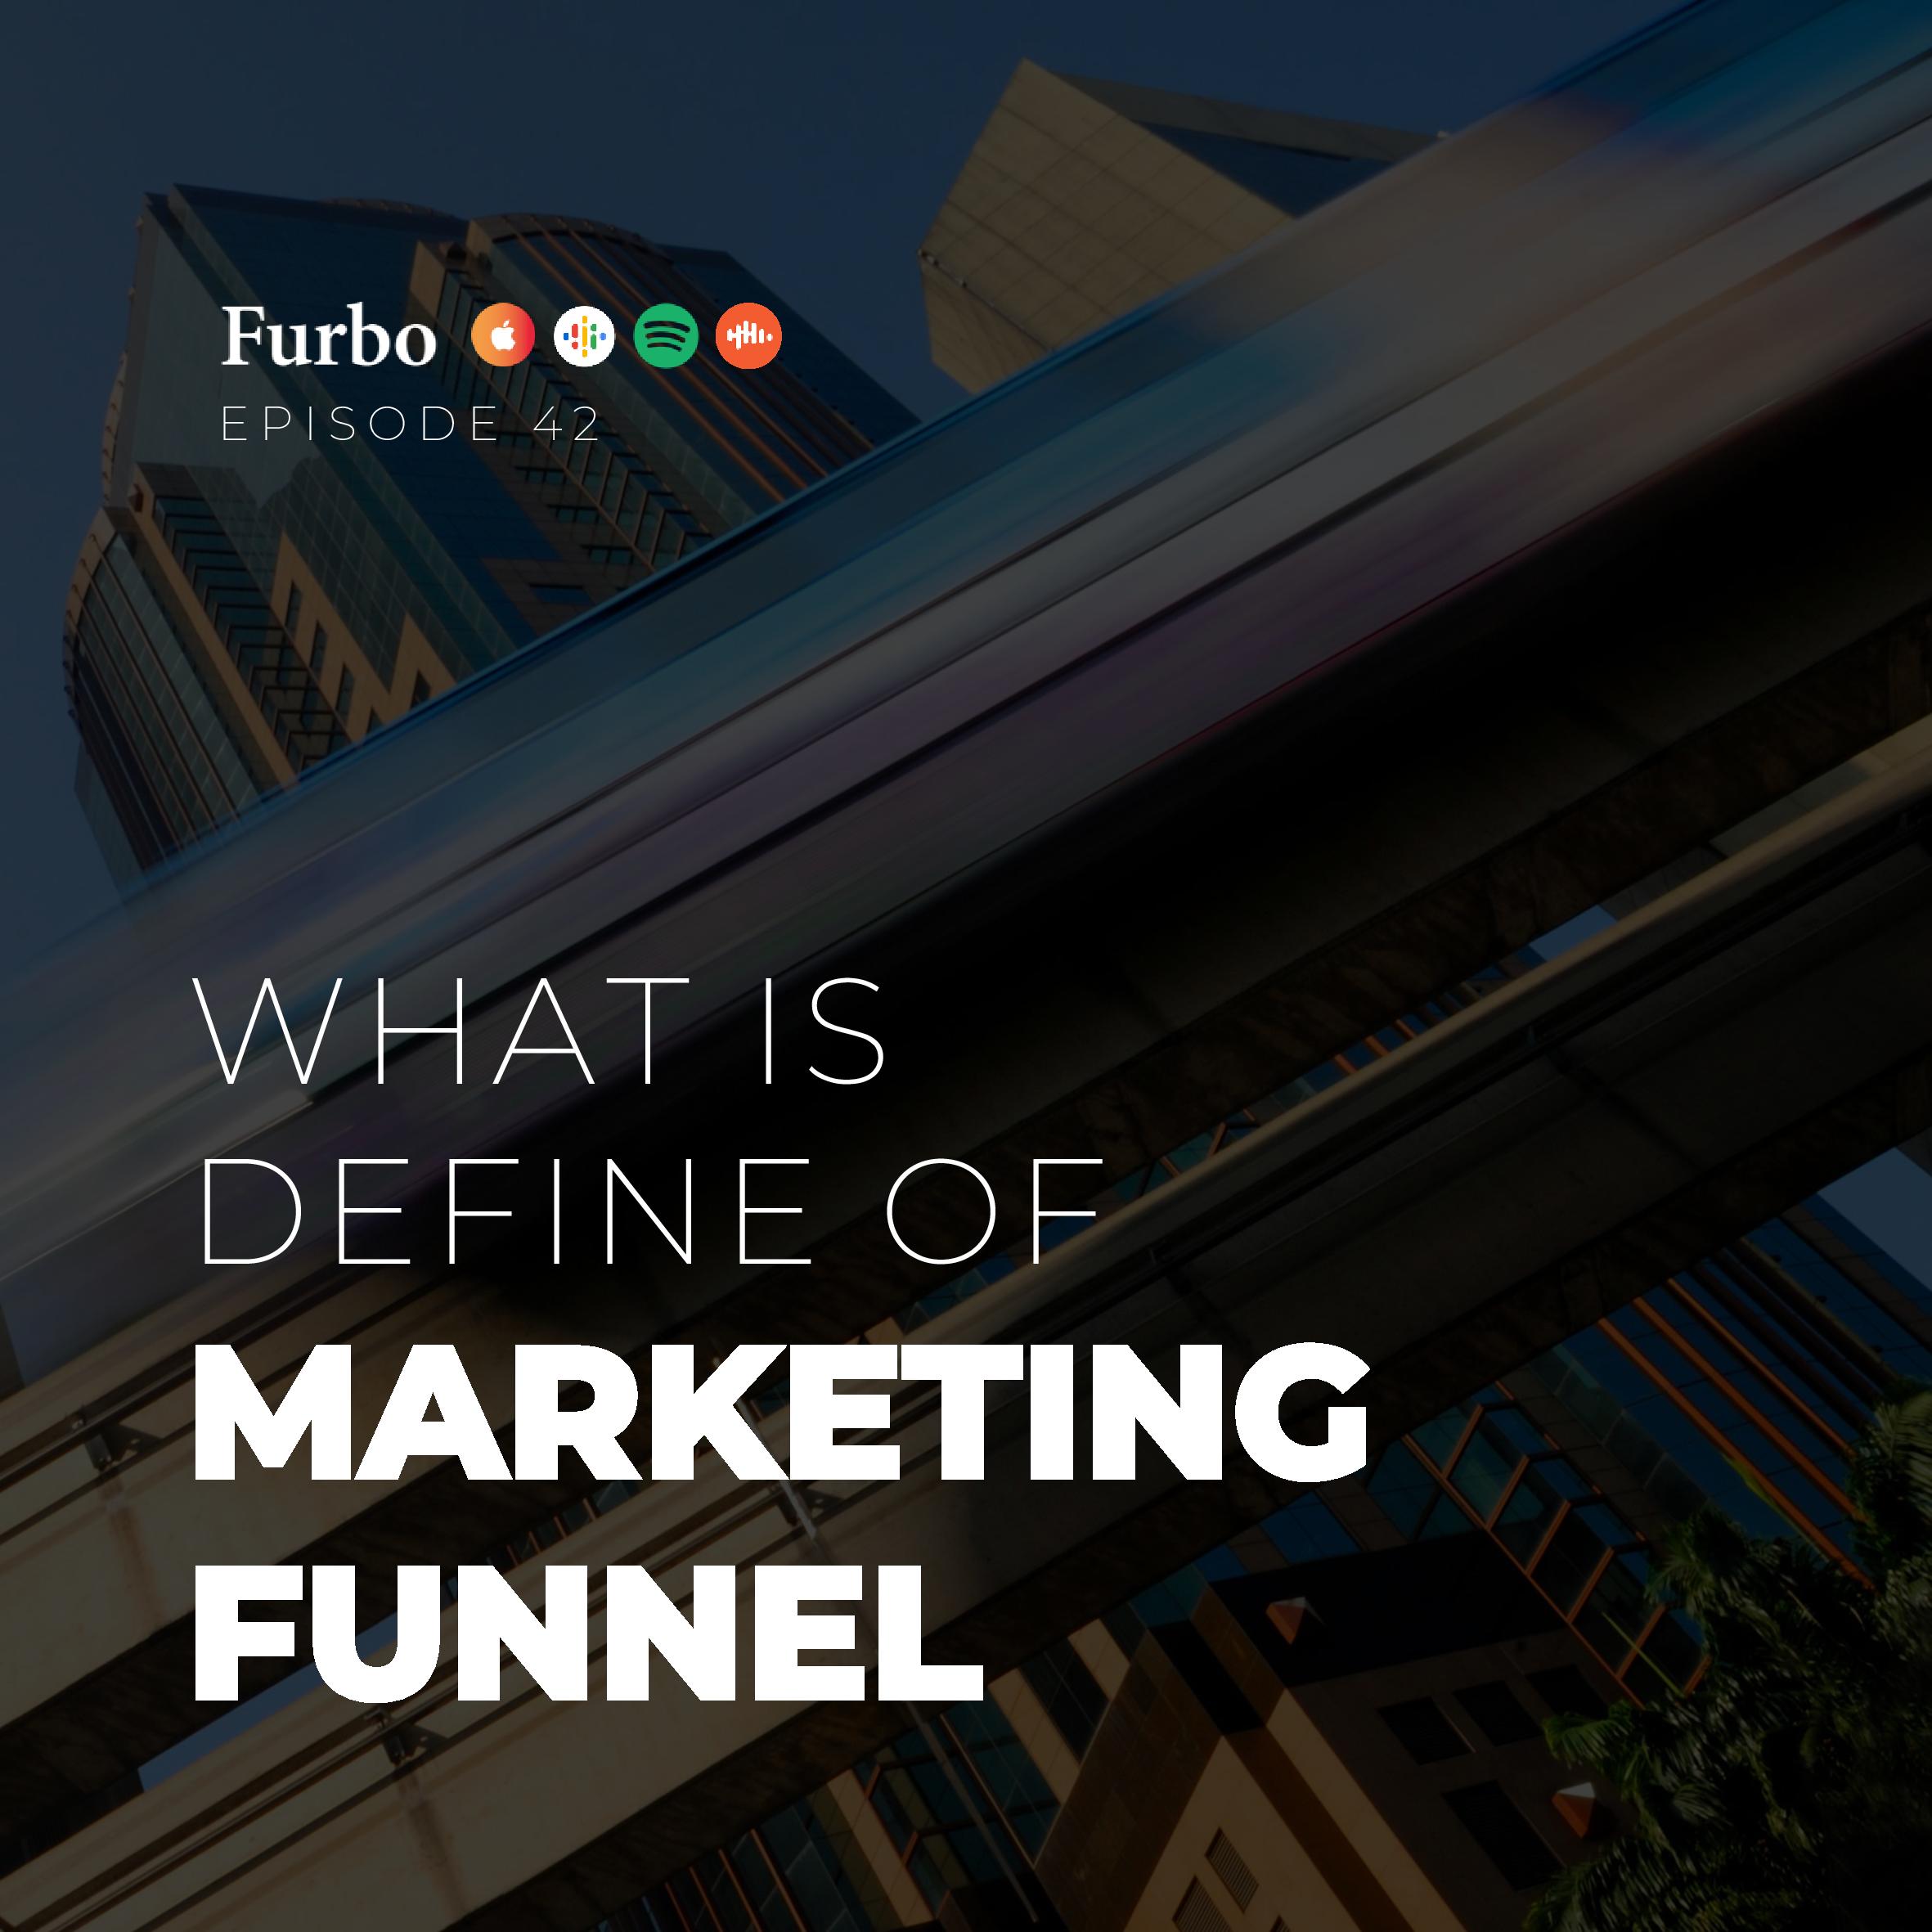 E42: Marketing Funnel | قیف بازاریابی چیست و از چه مراحلی تشکیل شده است؟